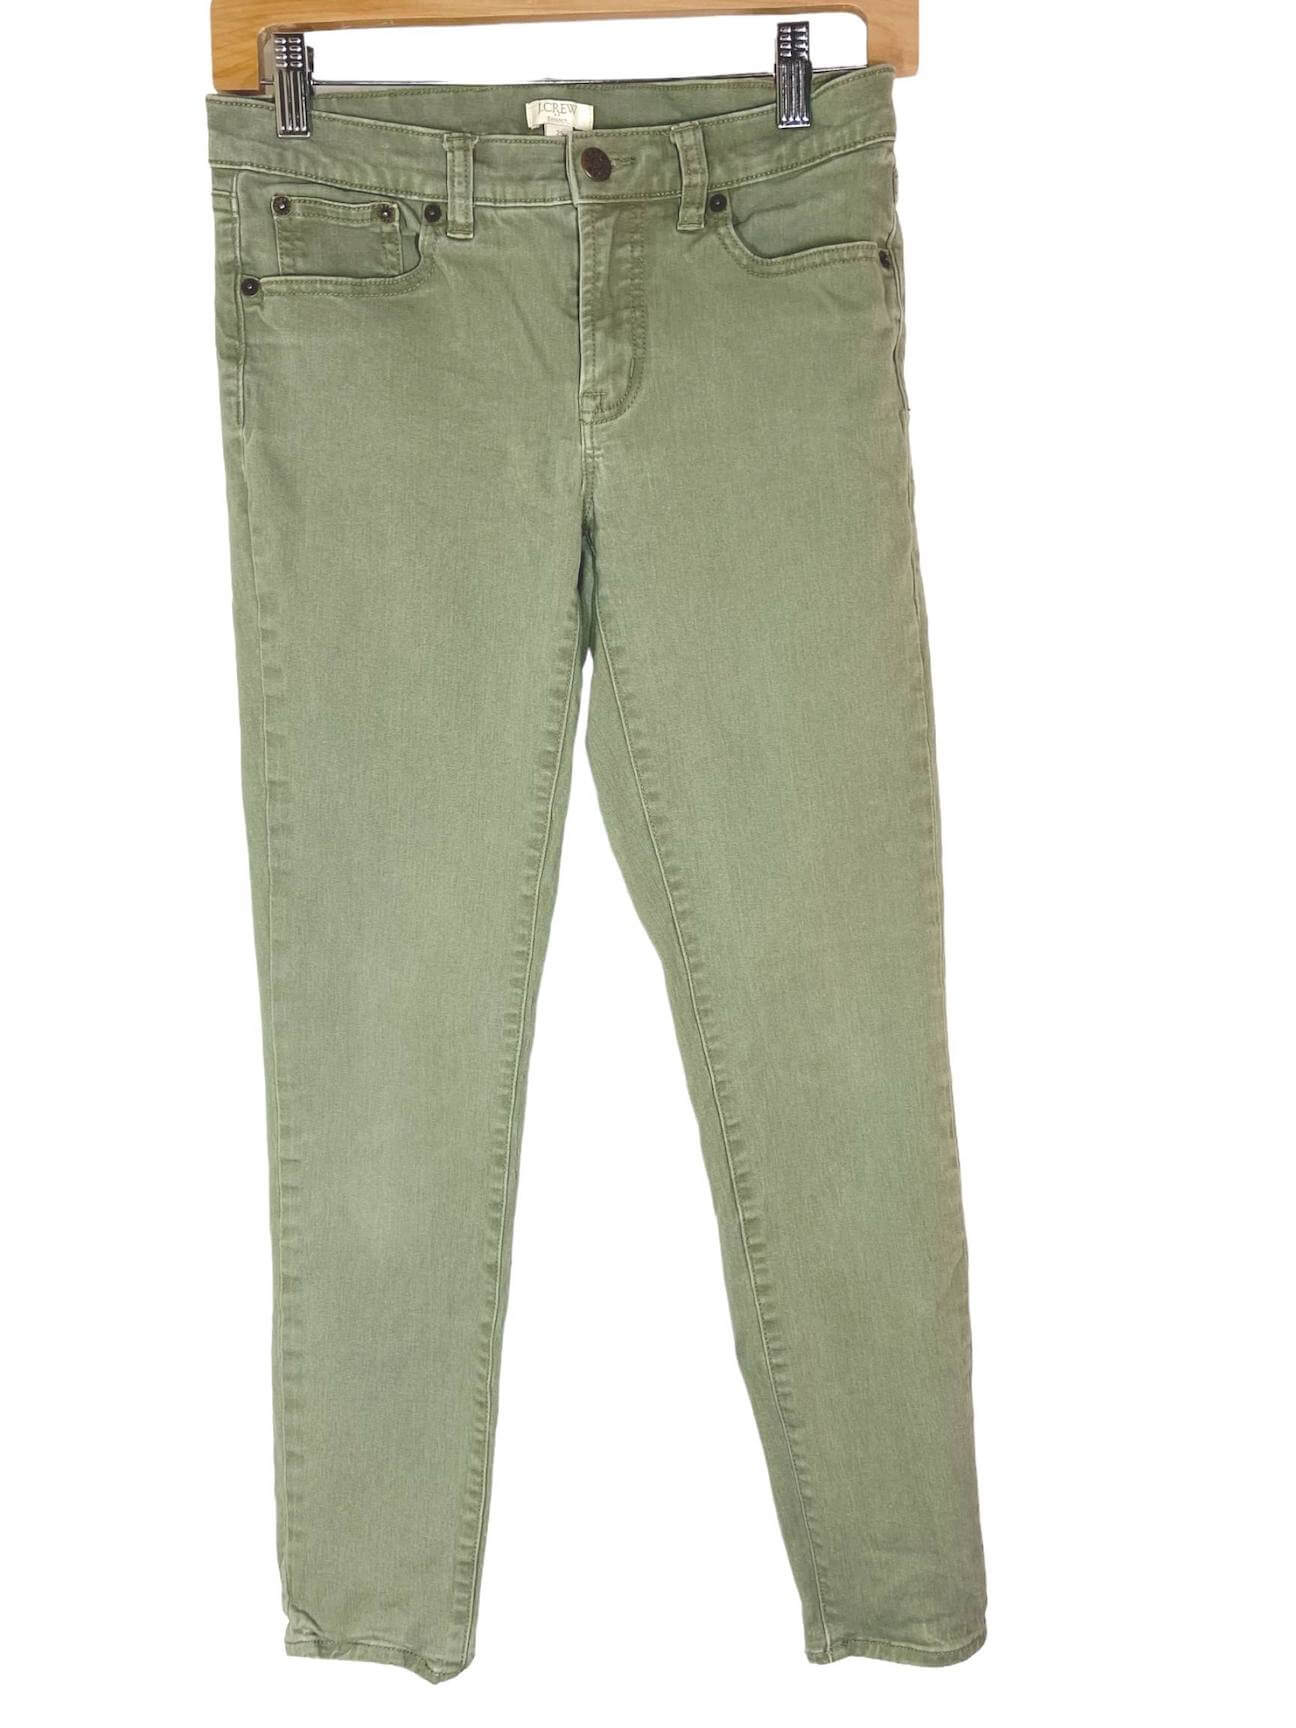 Soft Autumn J.CREW sage green stretch jeans